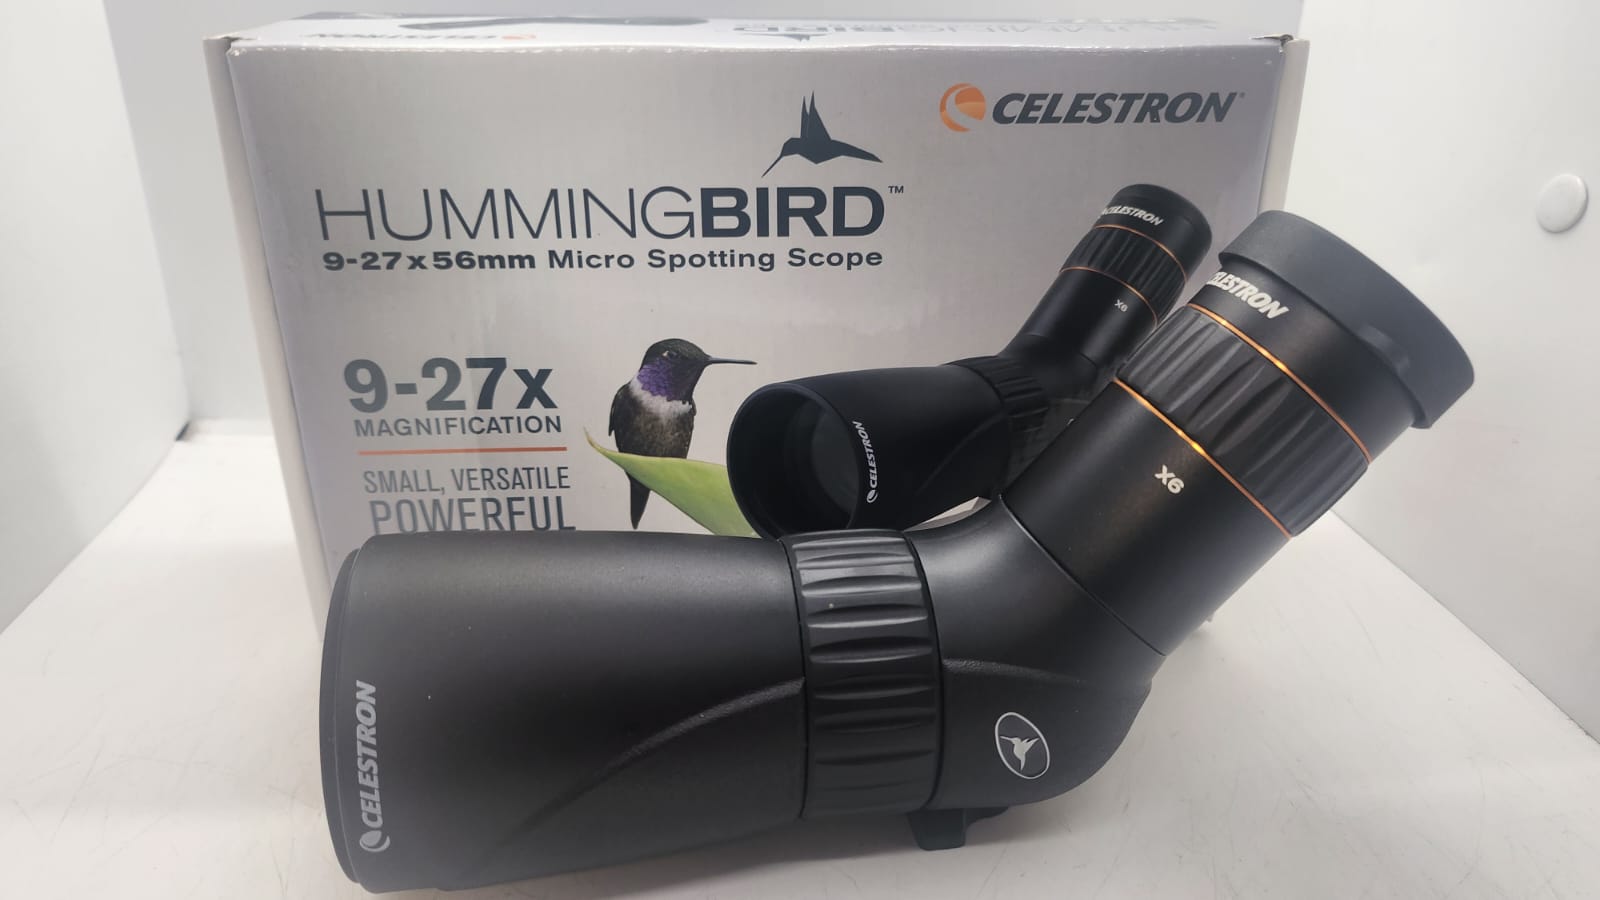 Celestron Hummingbird 9-27 x 56mm Micro Spotting Scope